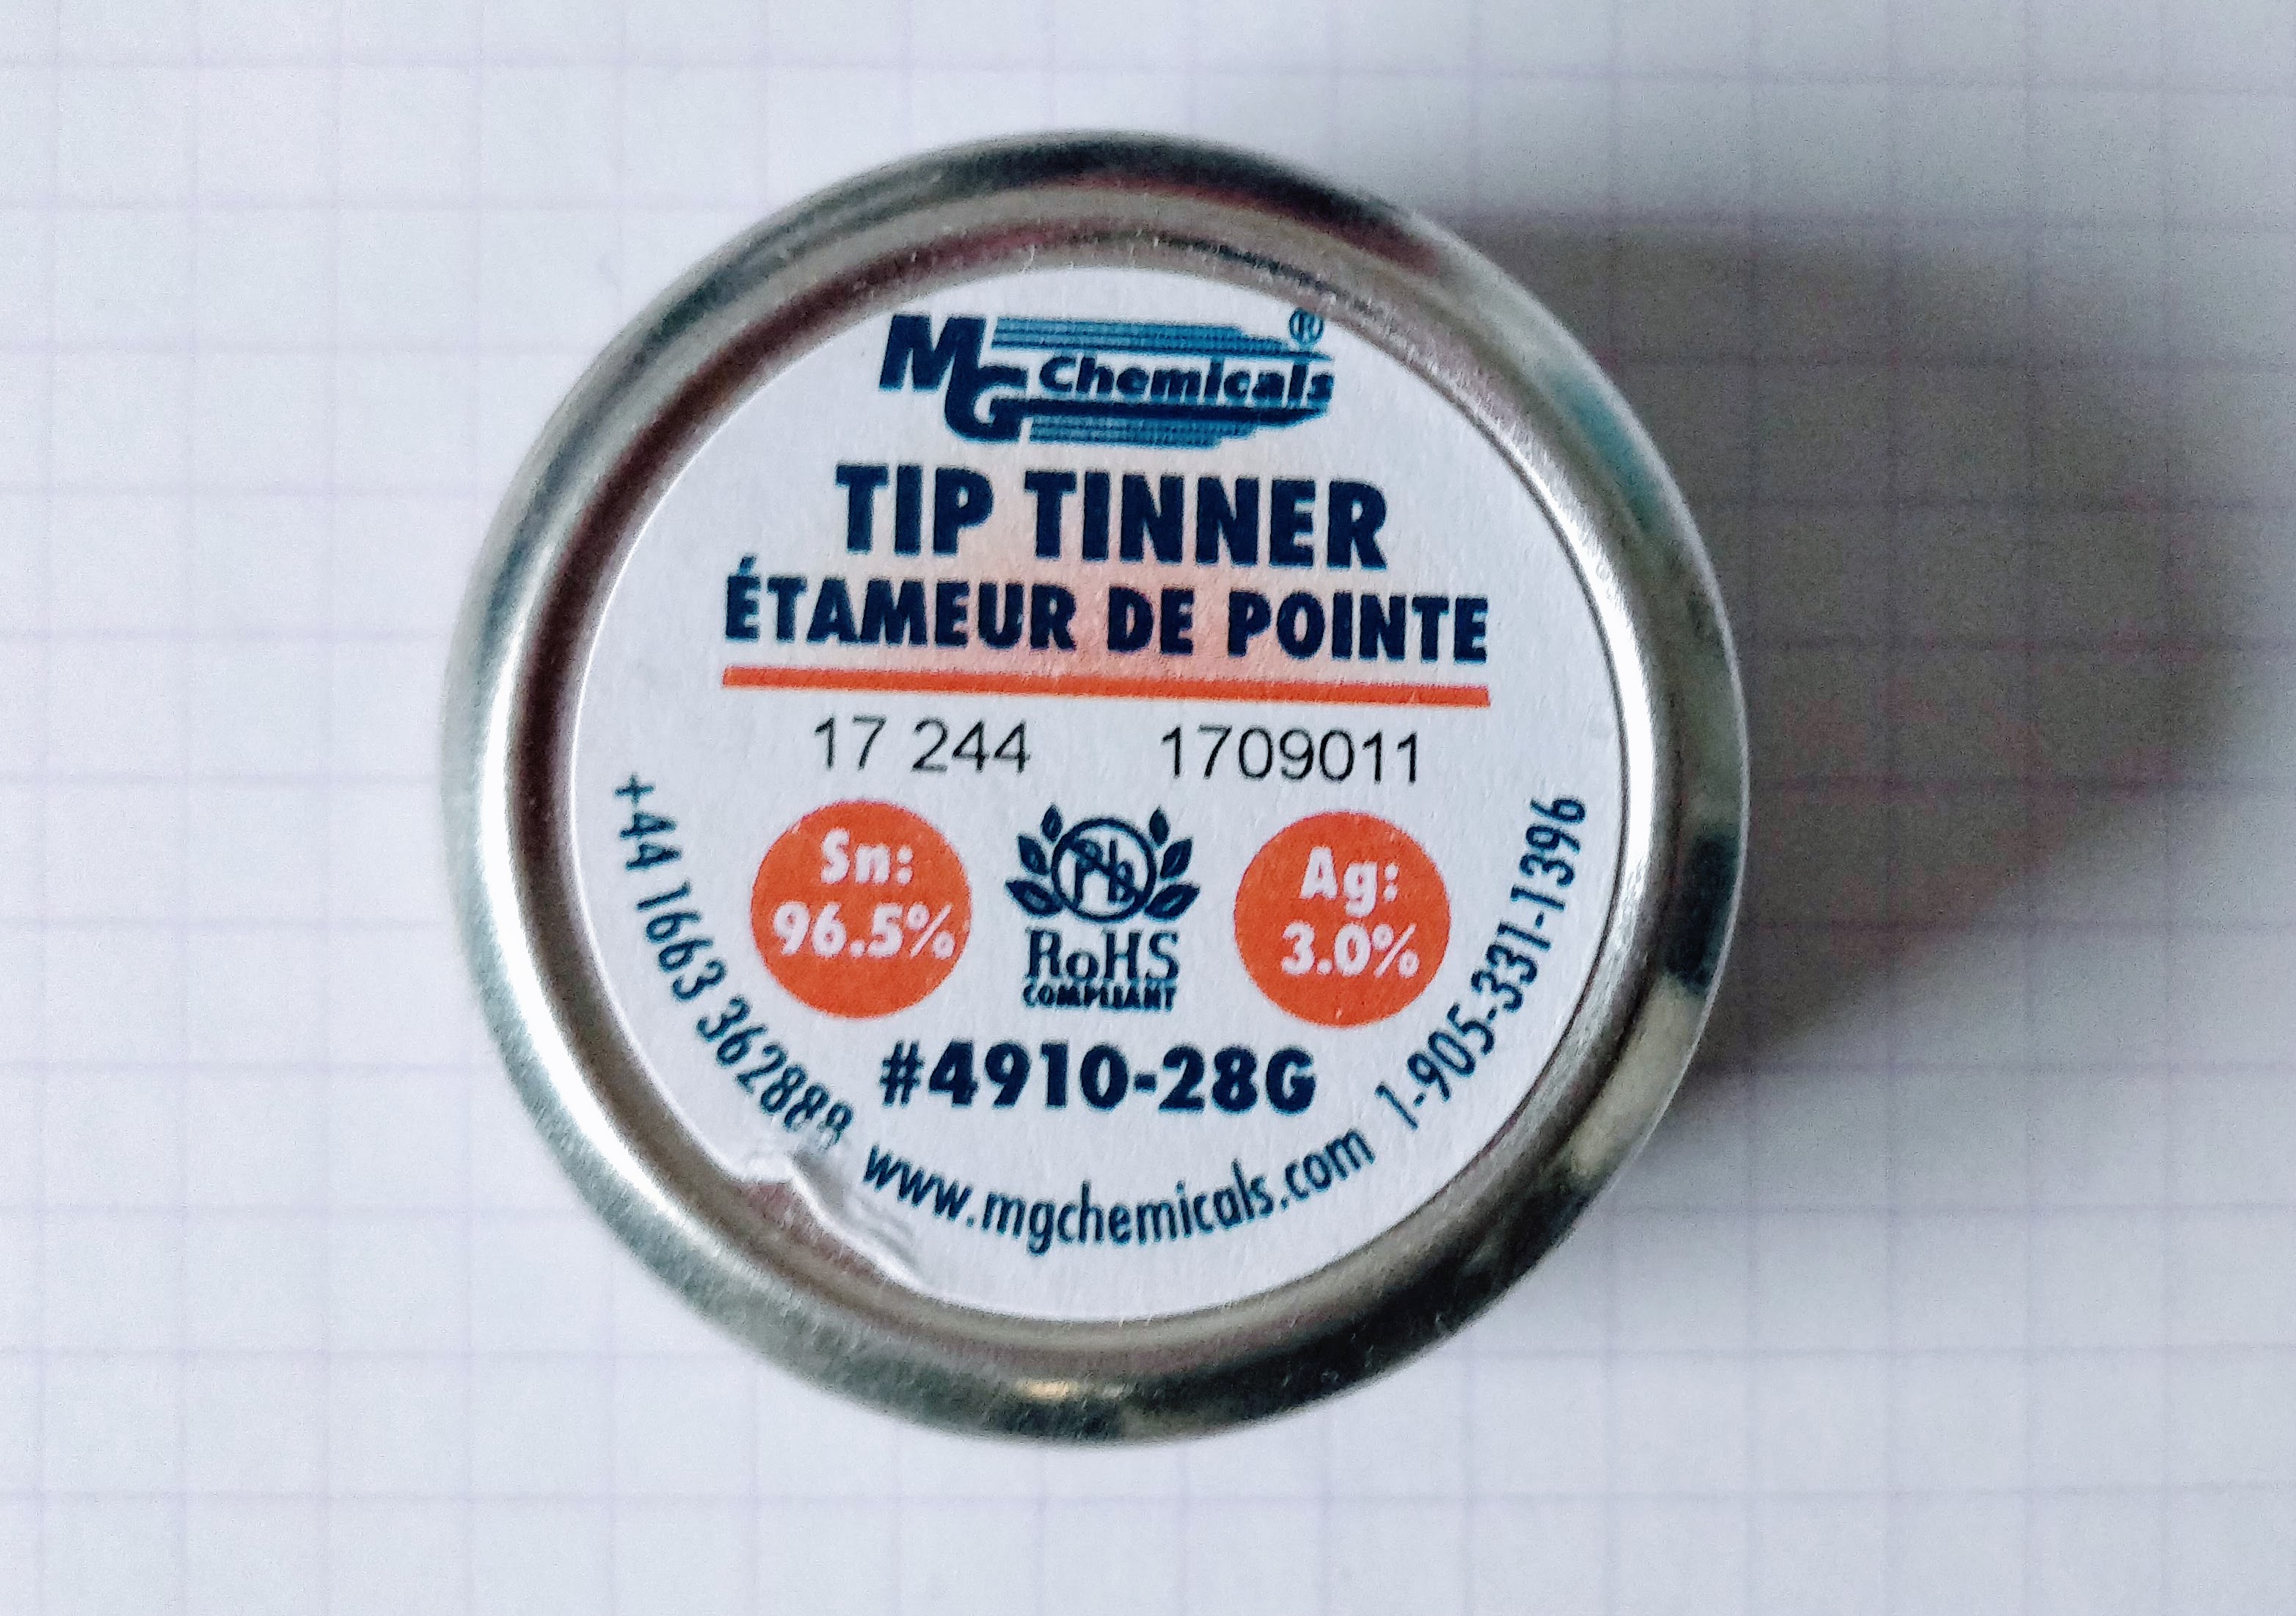 MgChemicals tip tinning